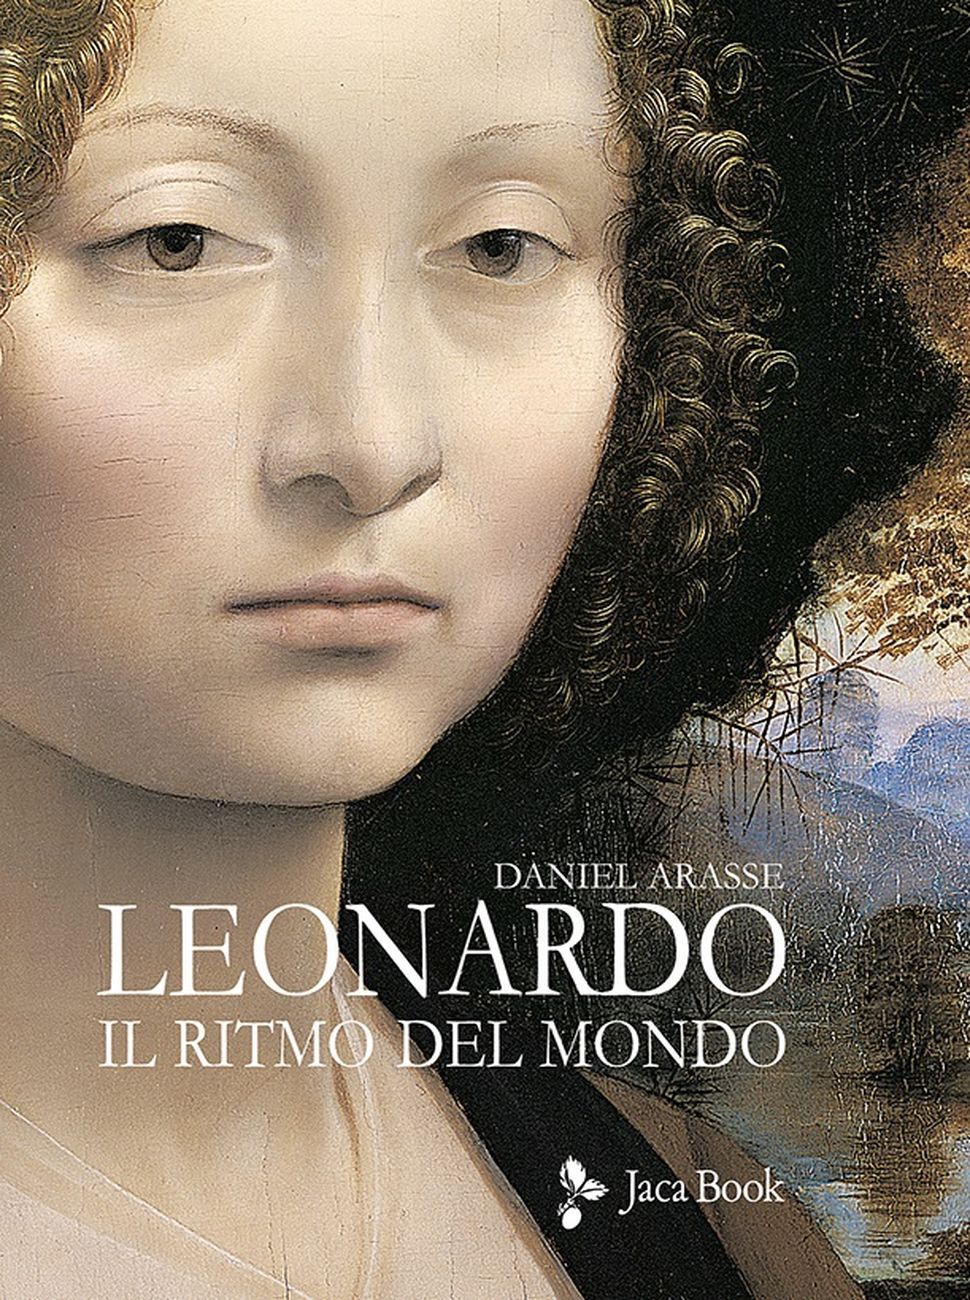 Daniel Arasse – Leonardo. Il ritmo del mondo (Jaca Book, Milano 2019)